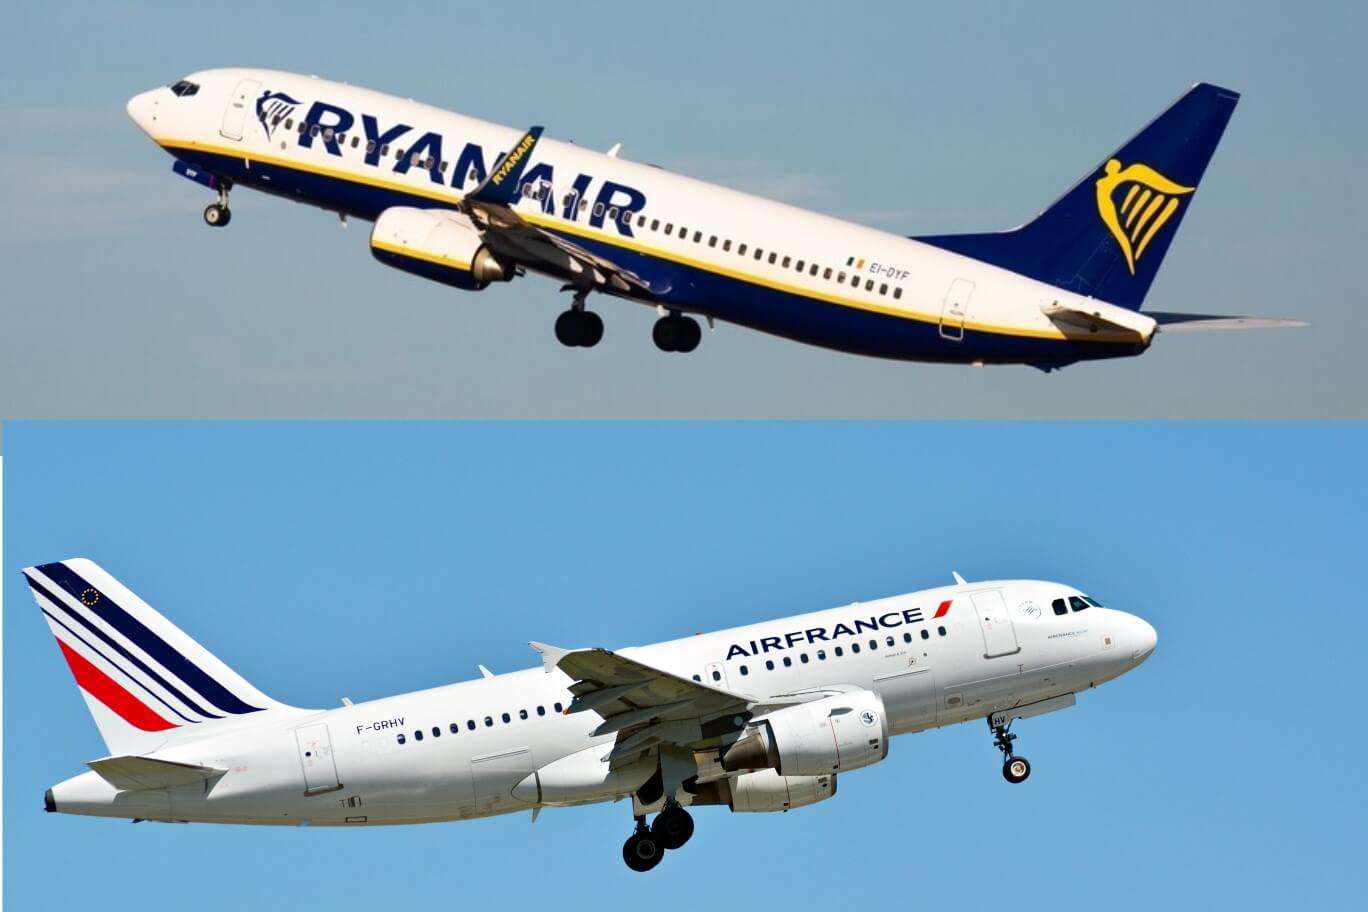 Disaster Averted at Birmingham: Air France & Ryanair Flight